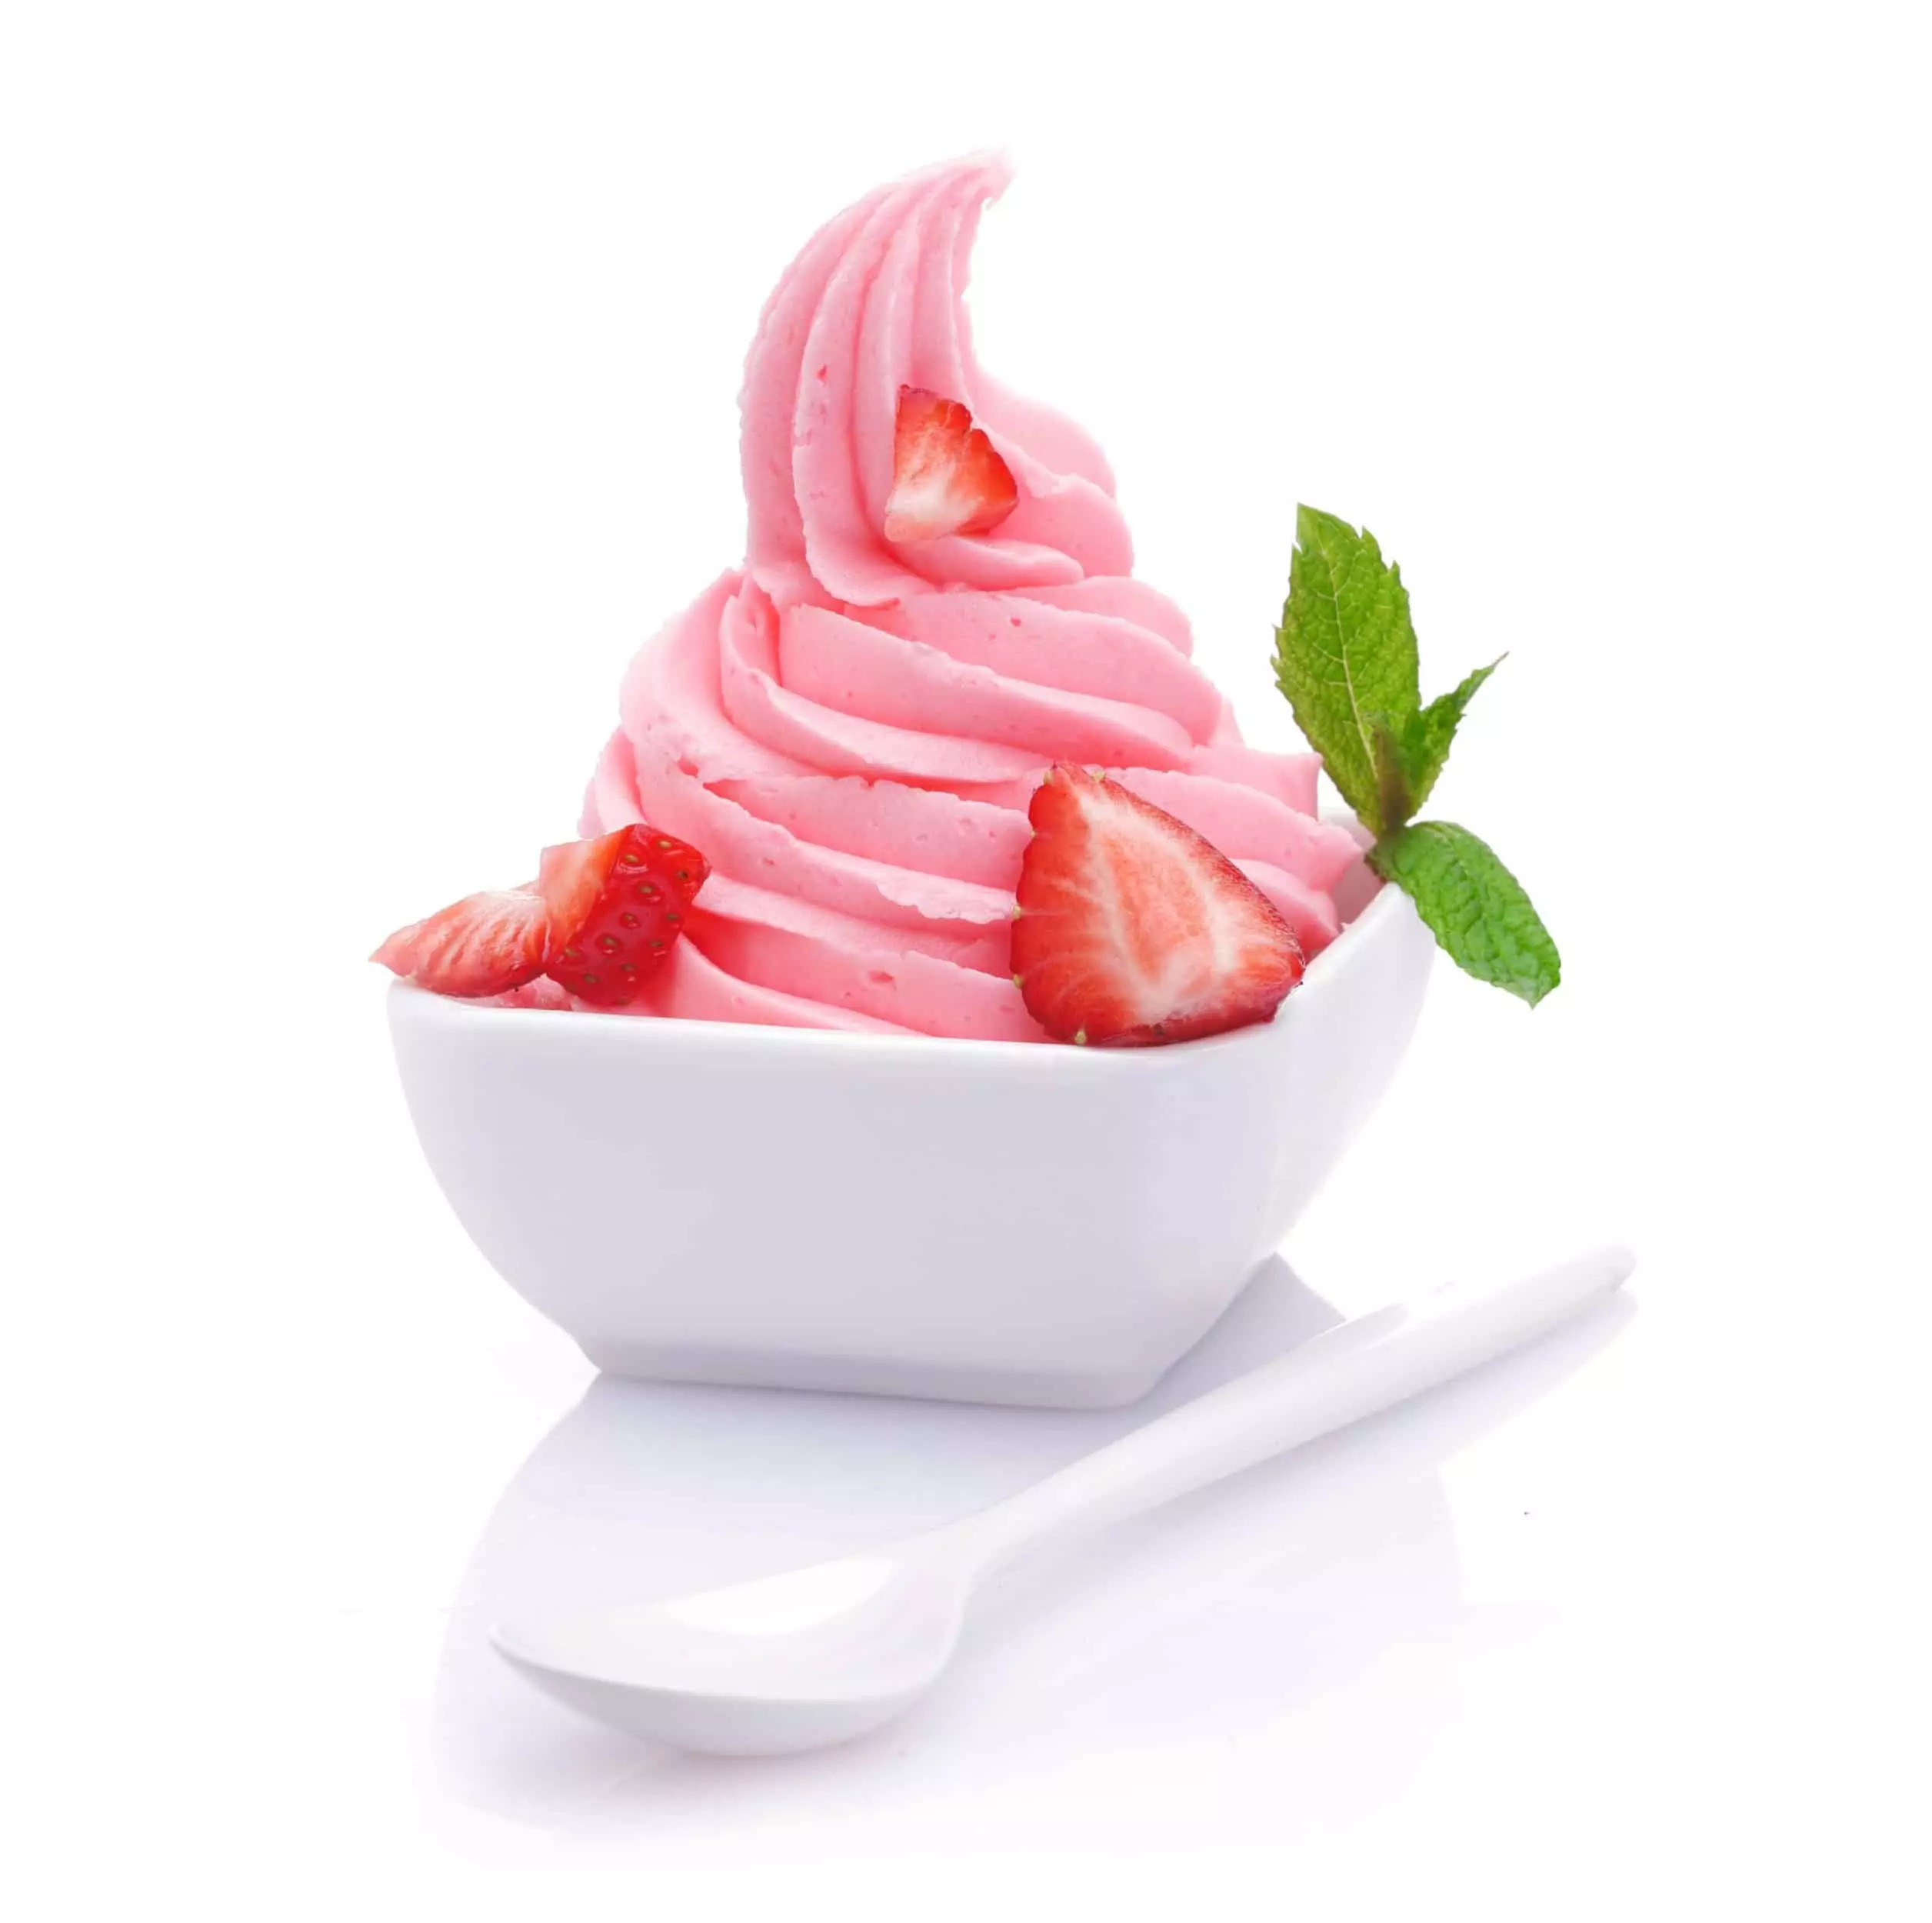 Strawberry yogurt in white bowl with white spoon